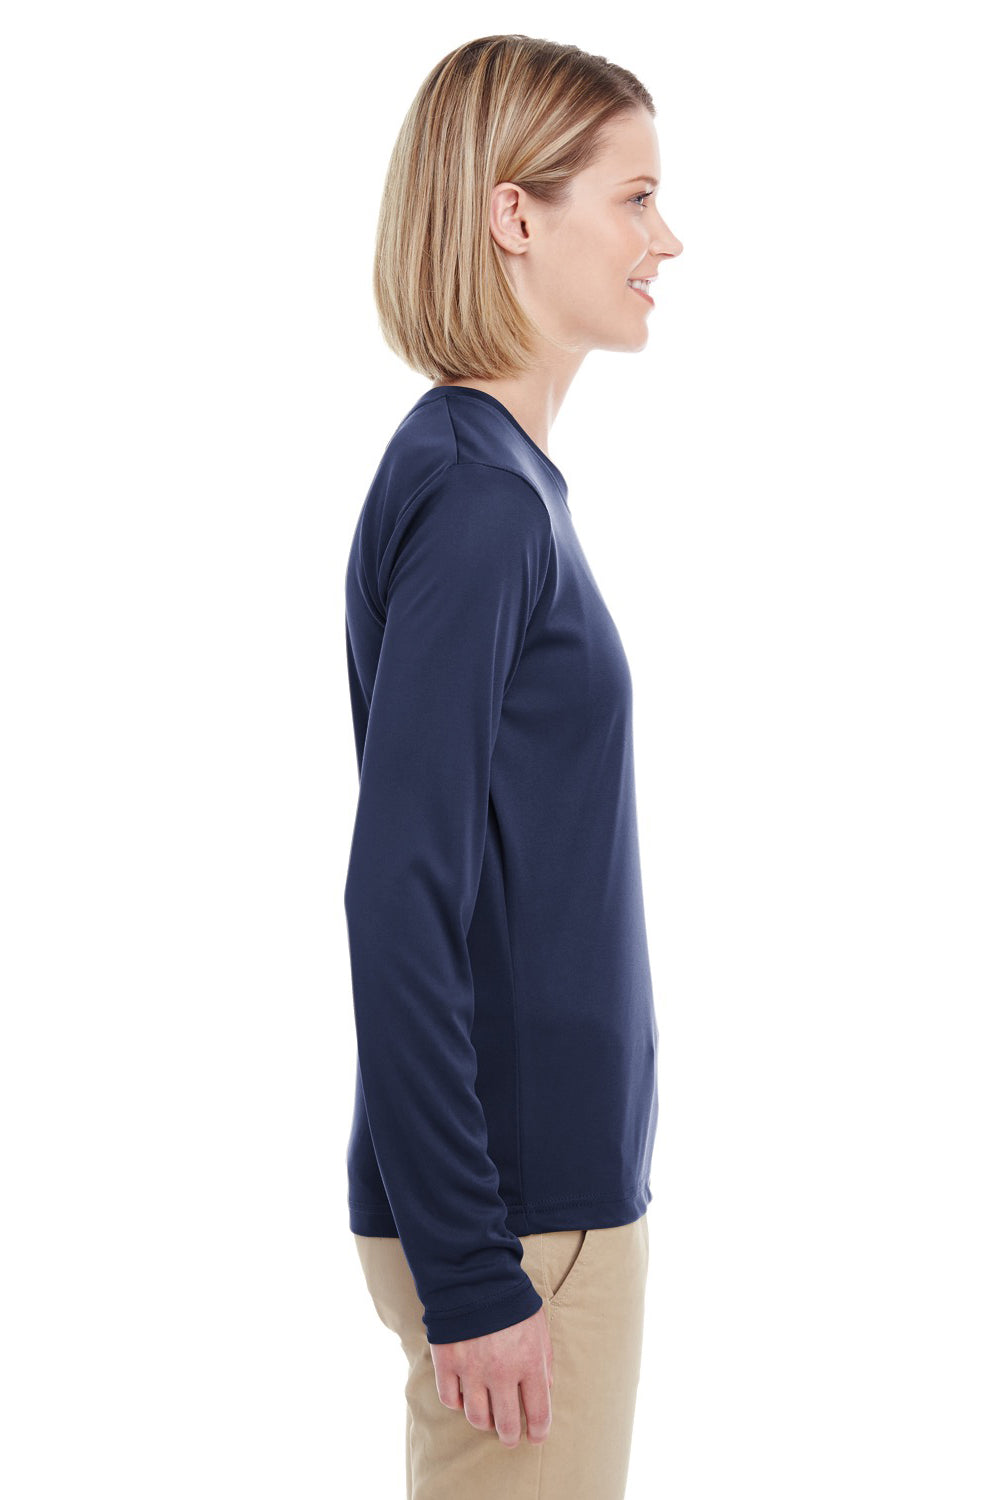 UltraClub 8622W Womens Cool & Dry Performance Moisture Wicking Long Sleeve Crewneck T-Shirt Navy Blue Side